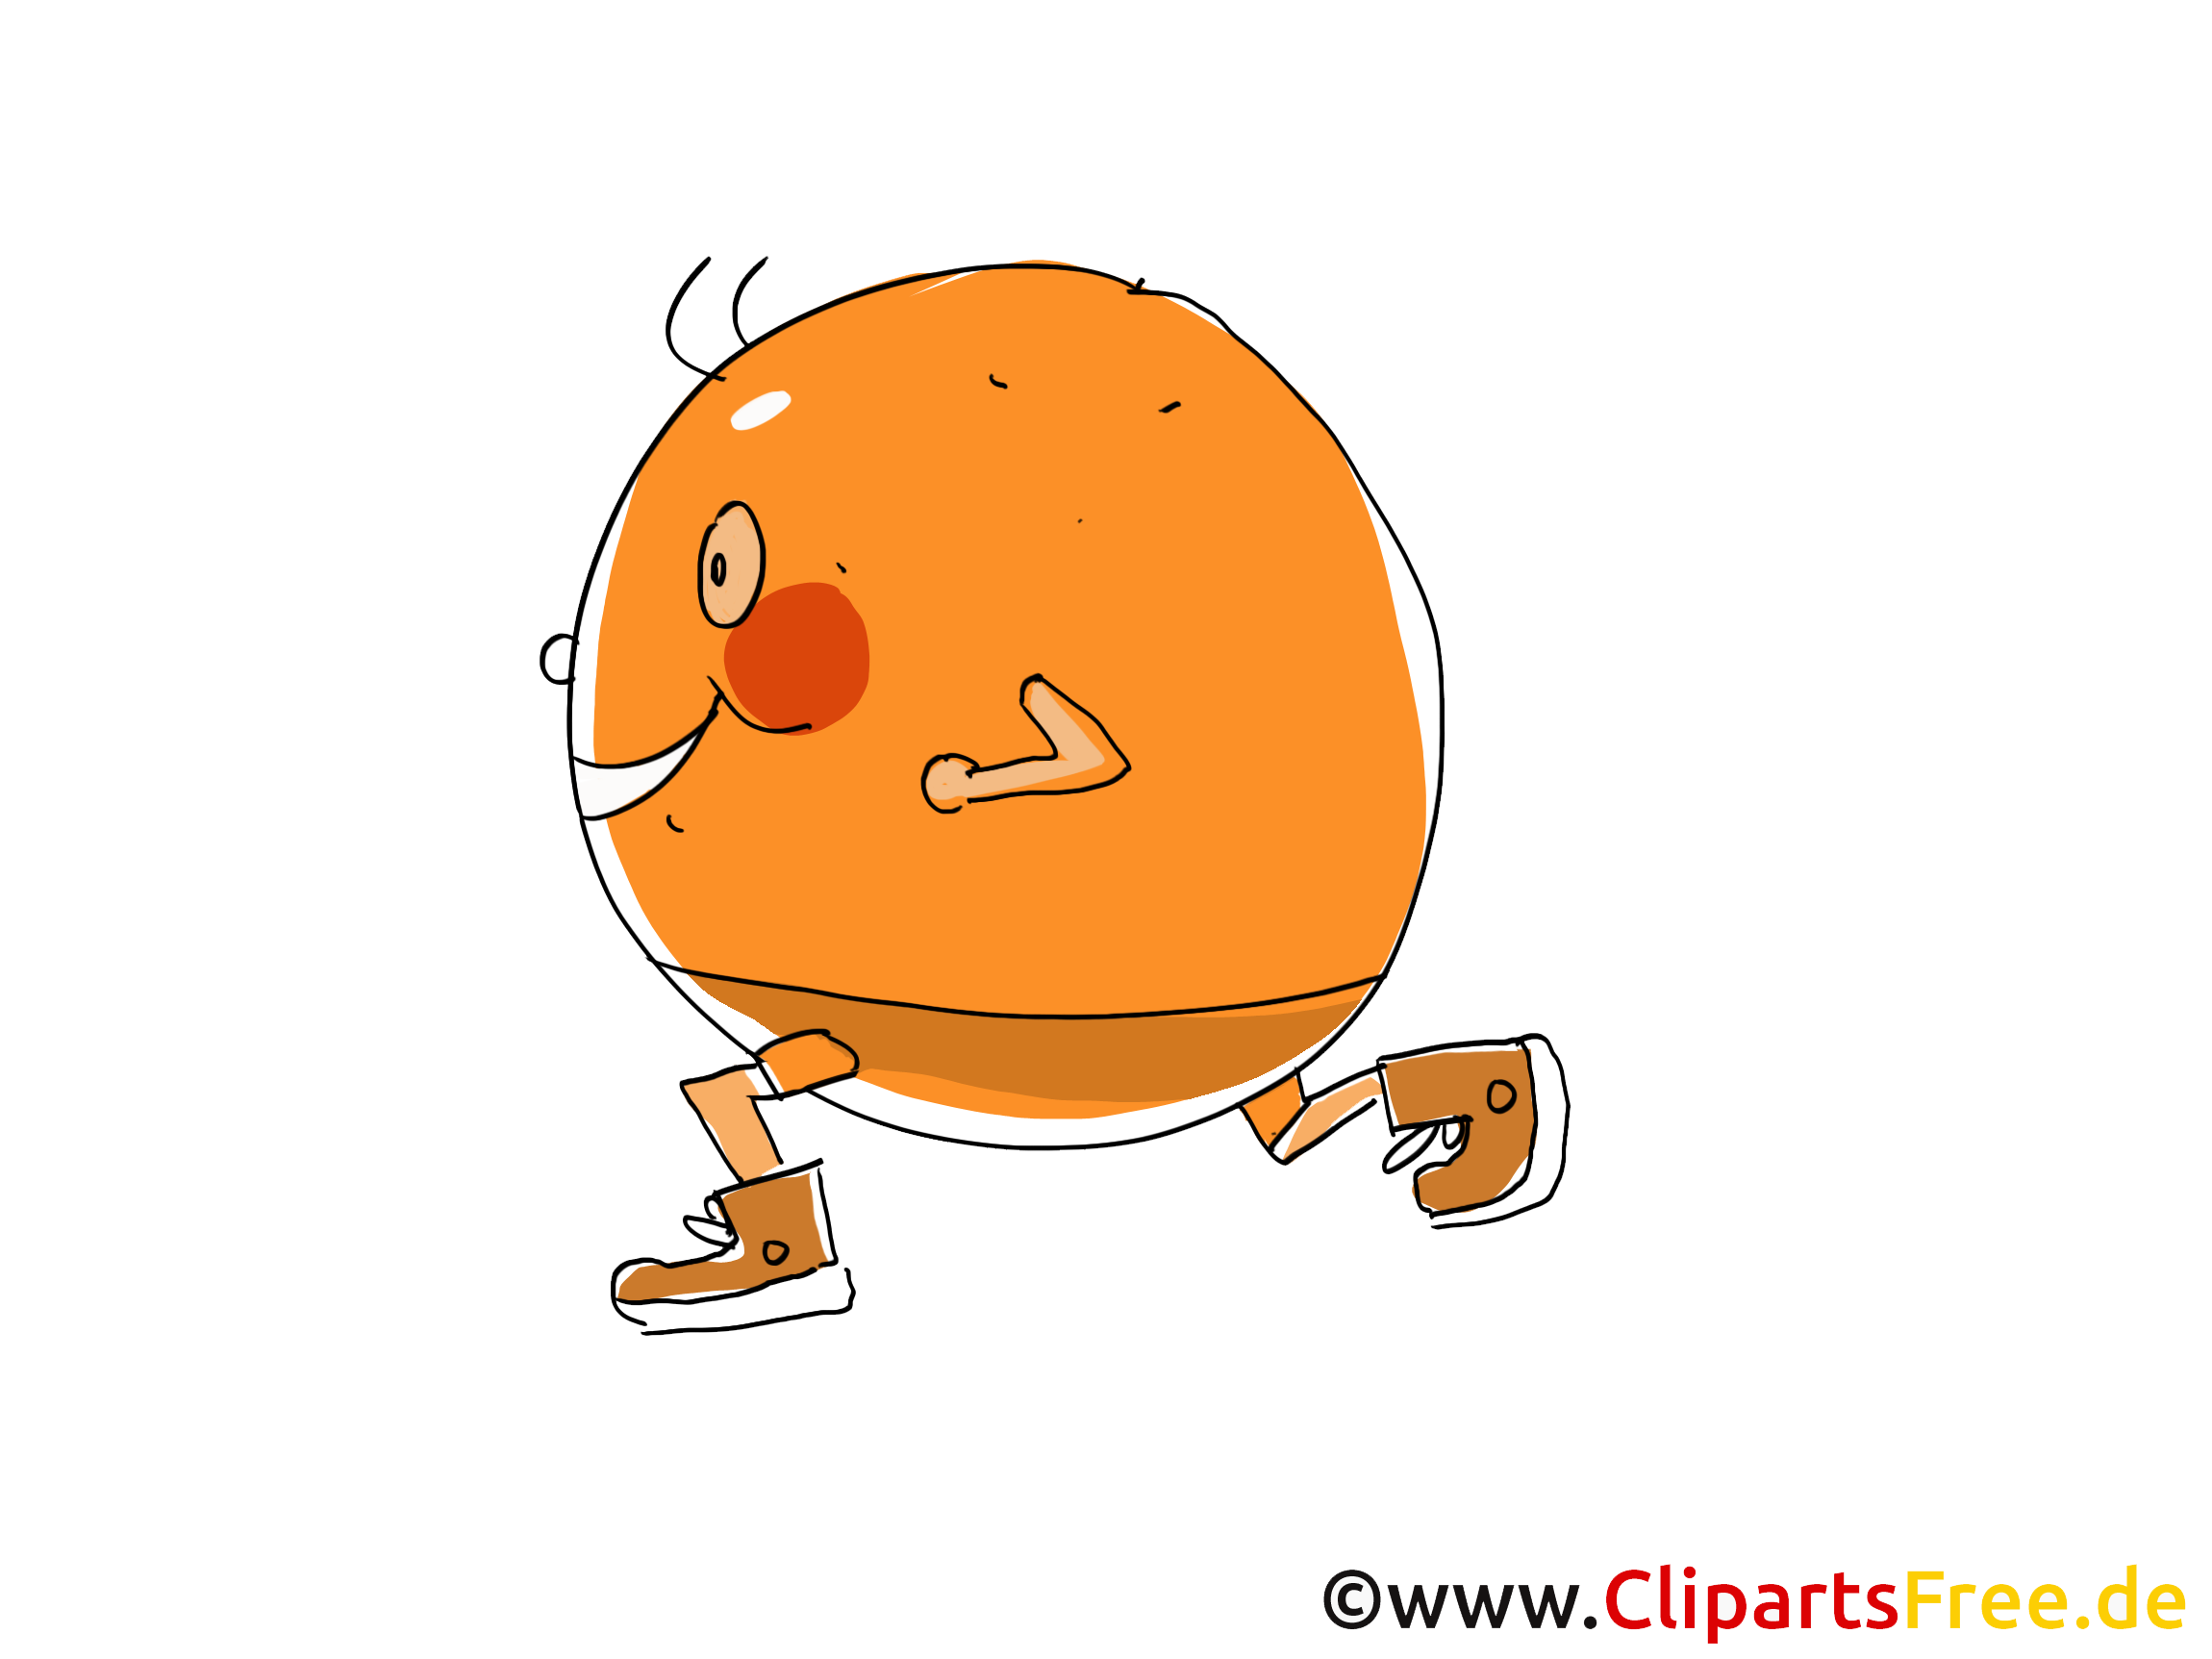 Orange illustration - Fruits images